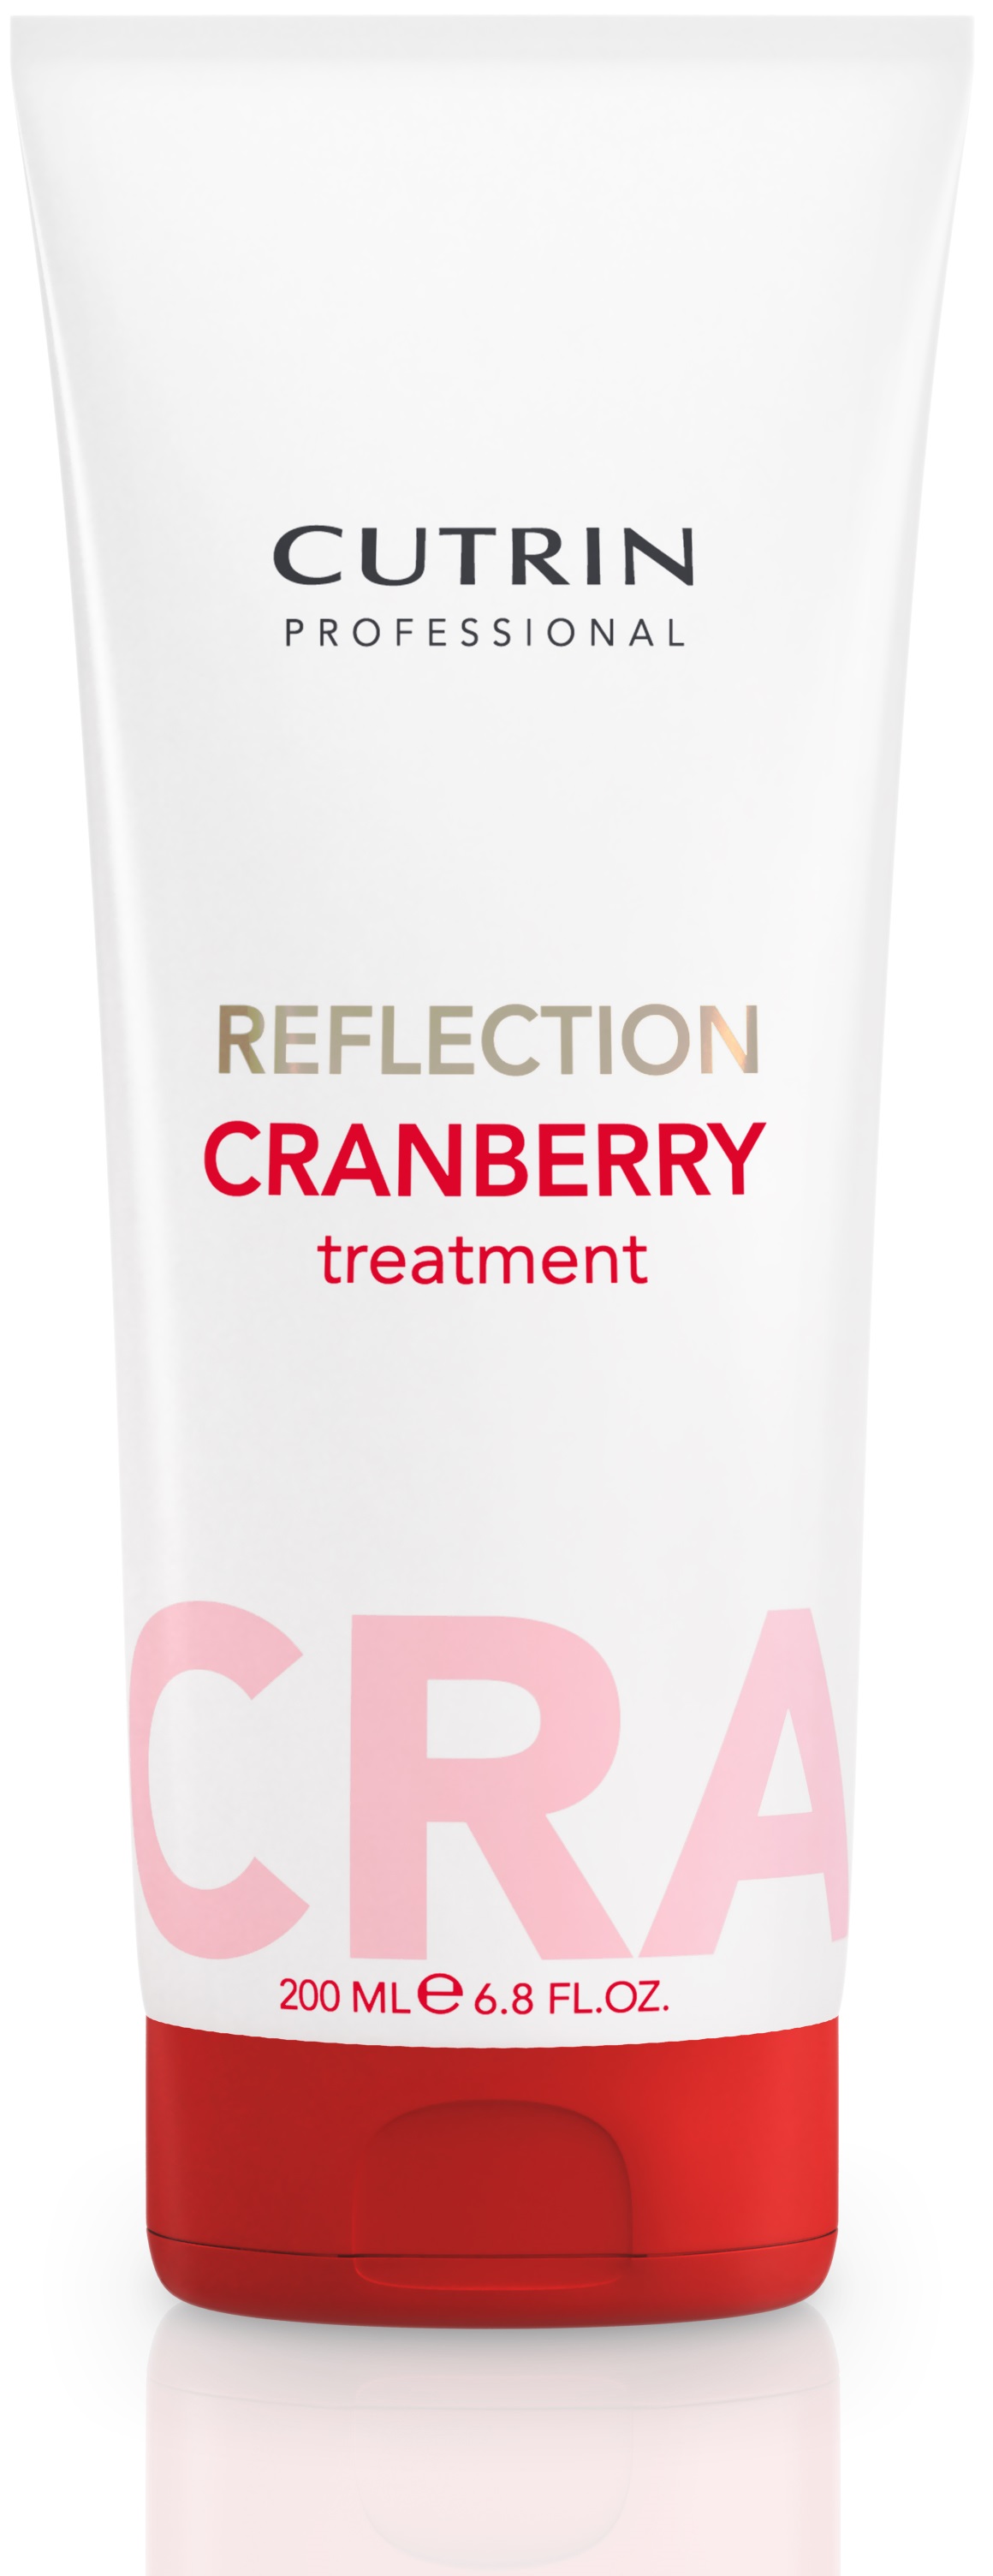 Cutrin Reflection Treatment Cranberry